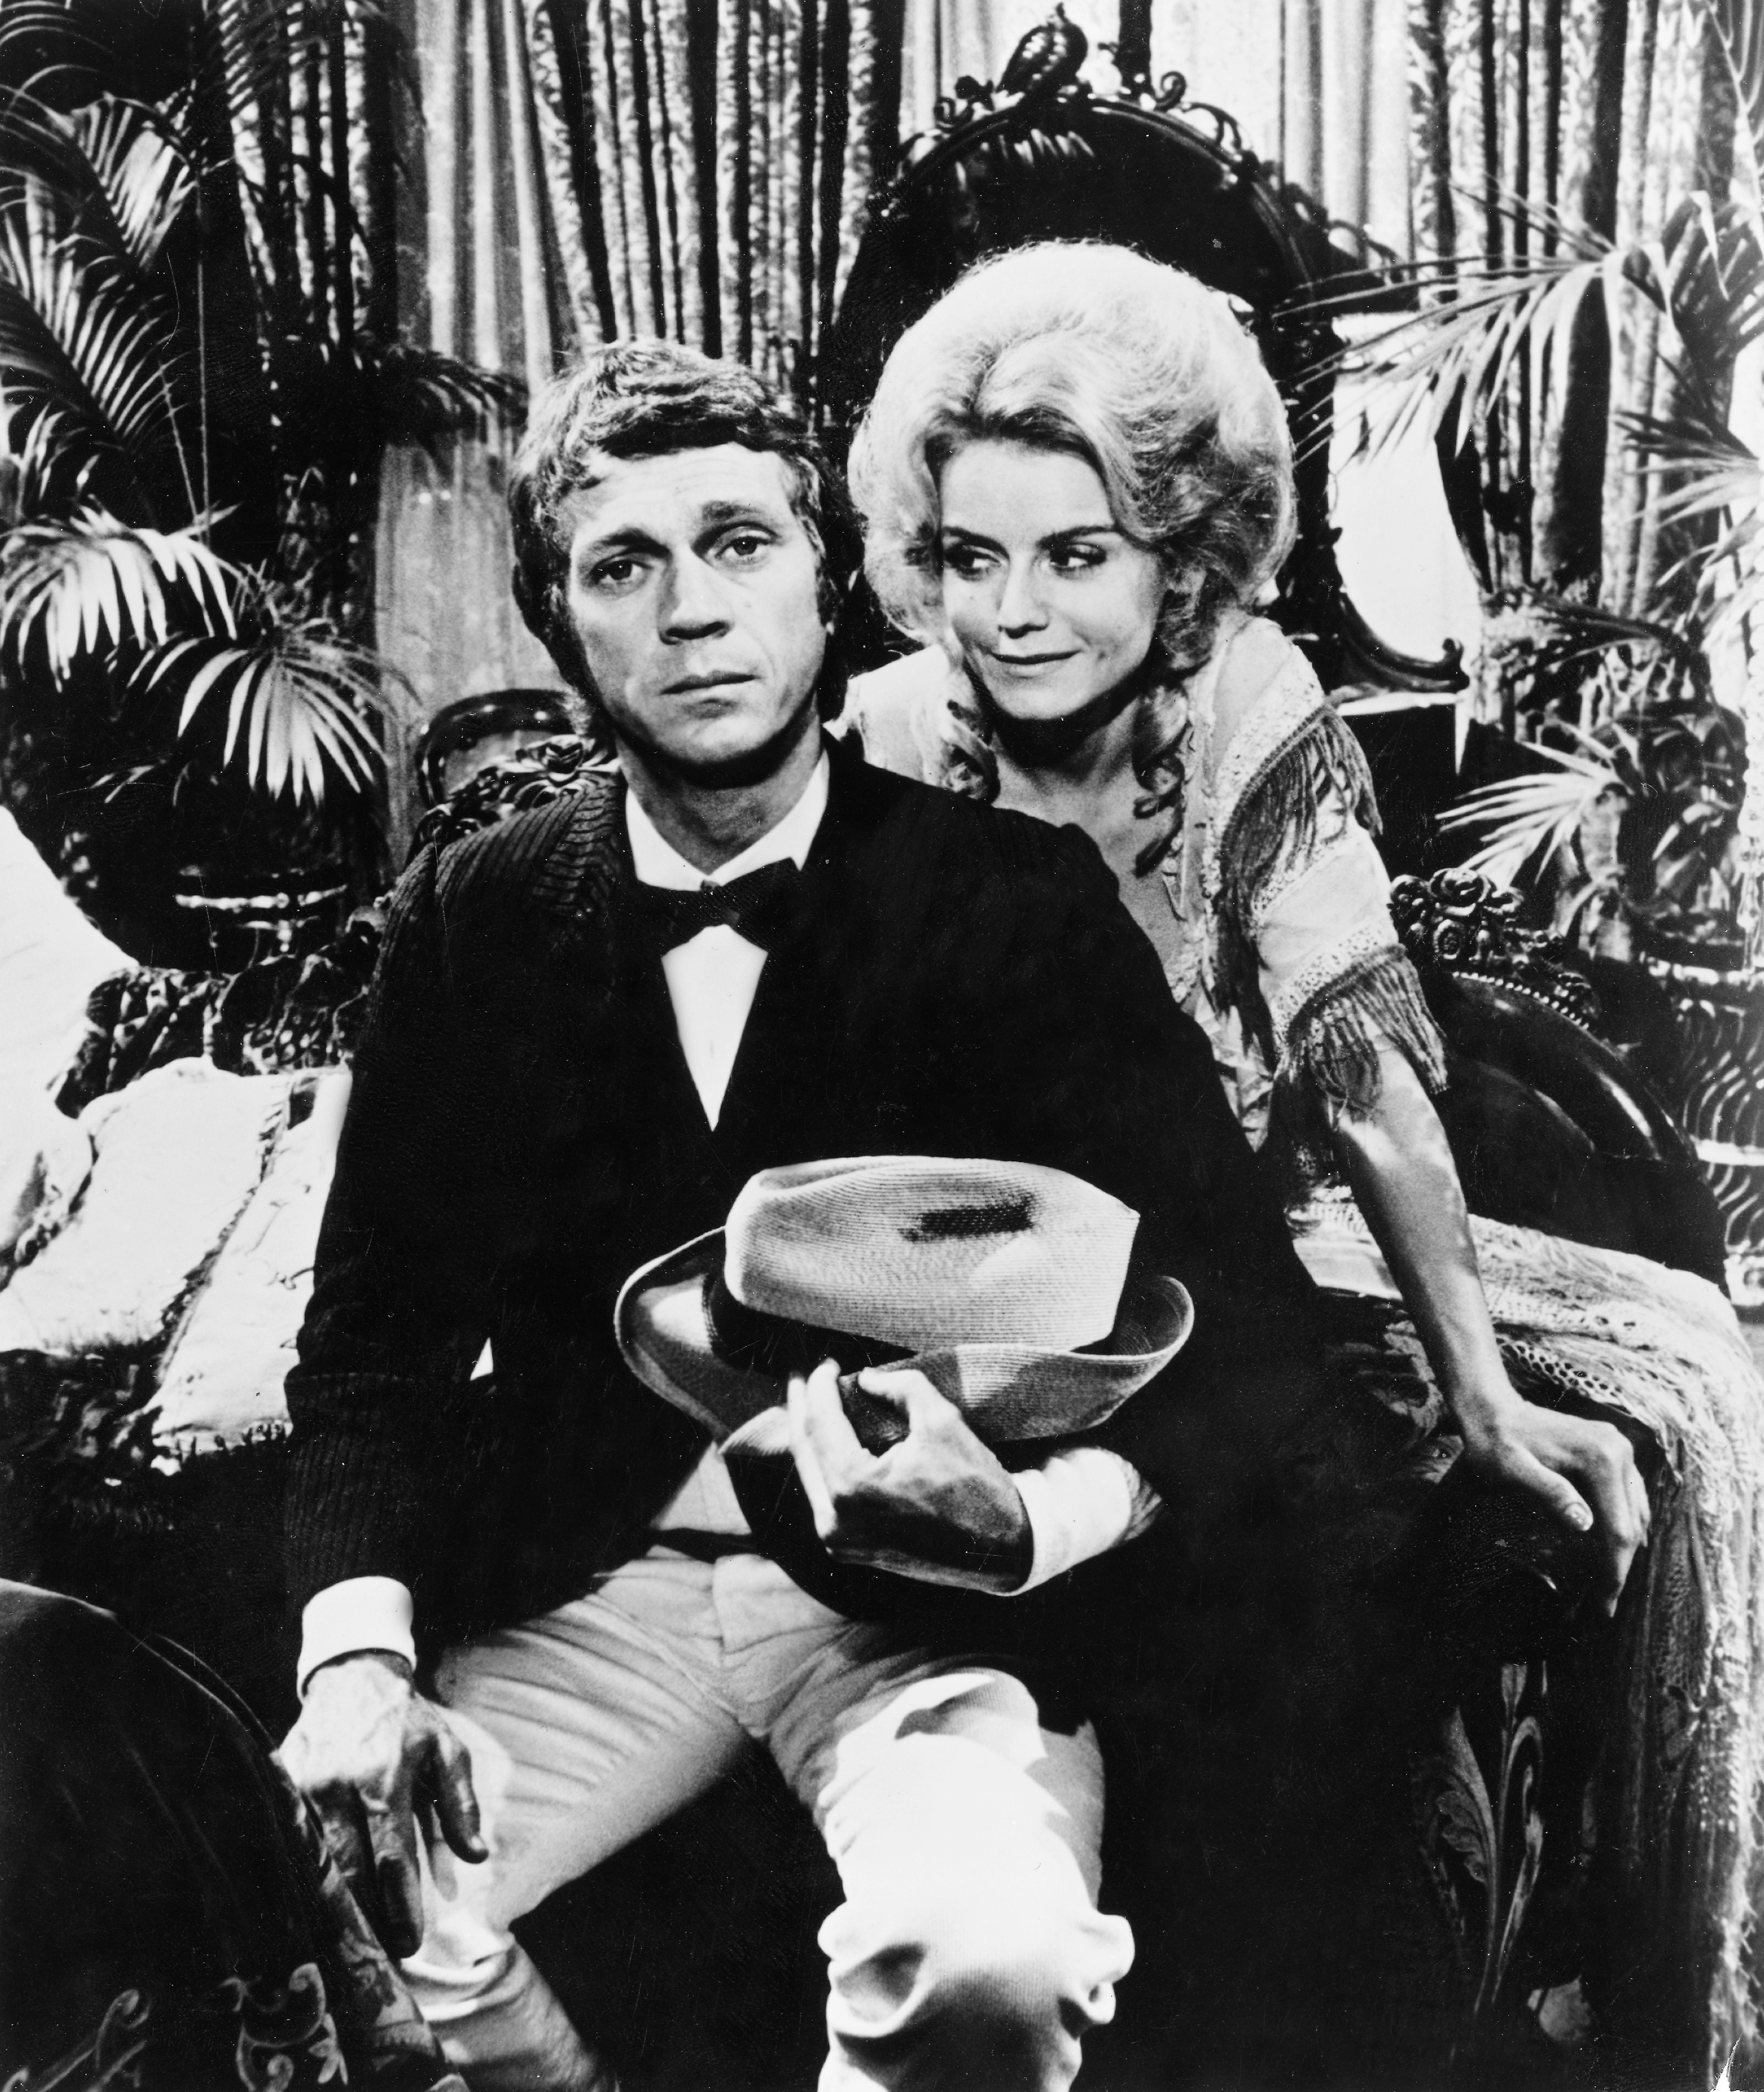 Steve McQueen et Sharon Farrell dans "The Reivers" ; en 1969 | Source : Getty Images